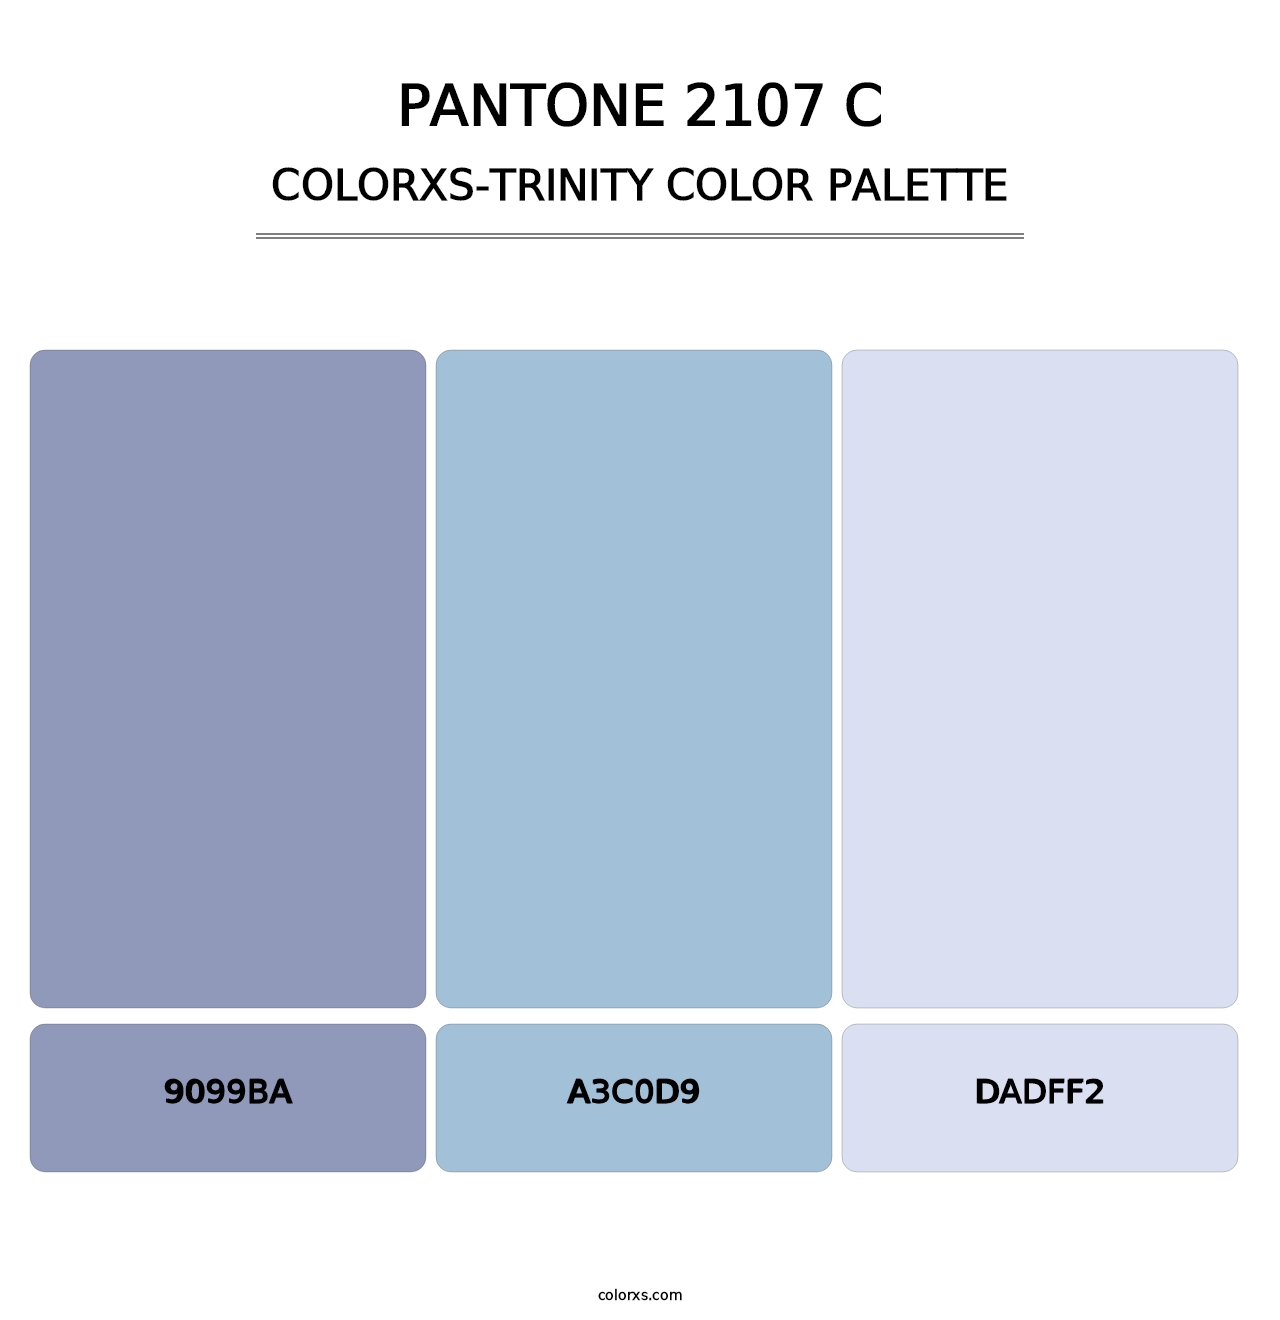 PANTONE 2107 C - Colorxs Trinity Palette